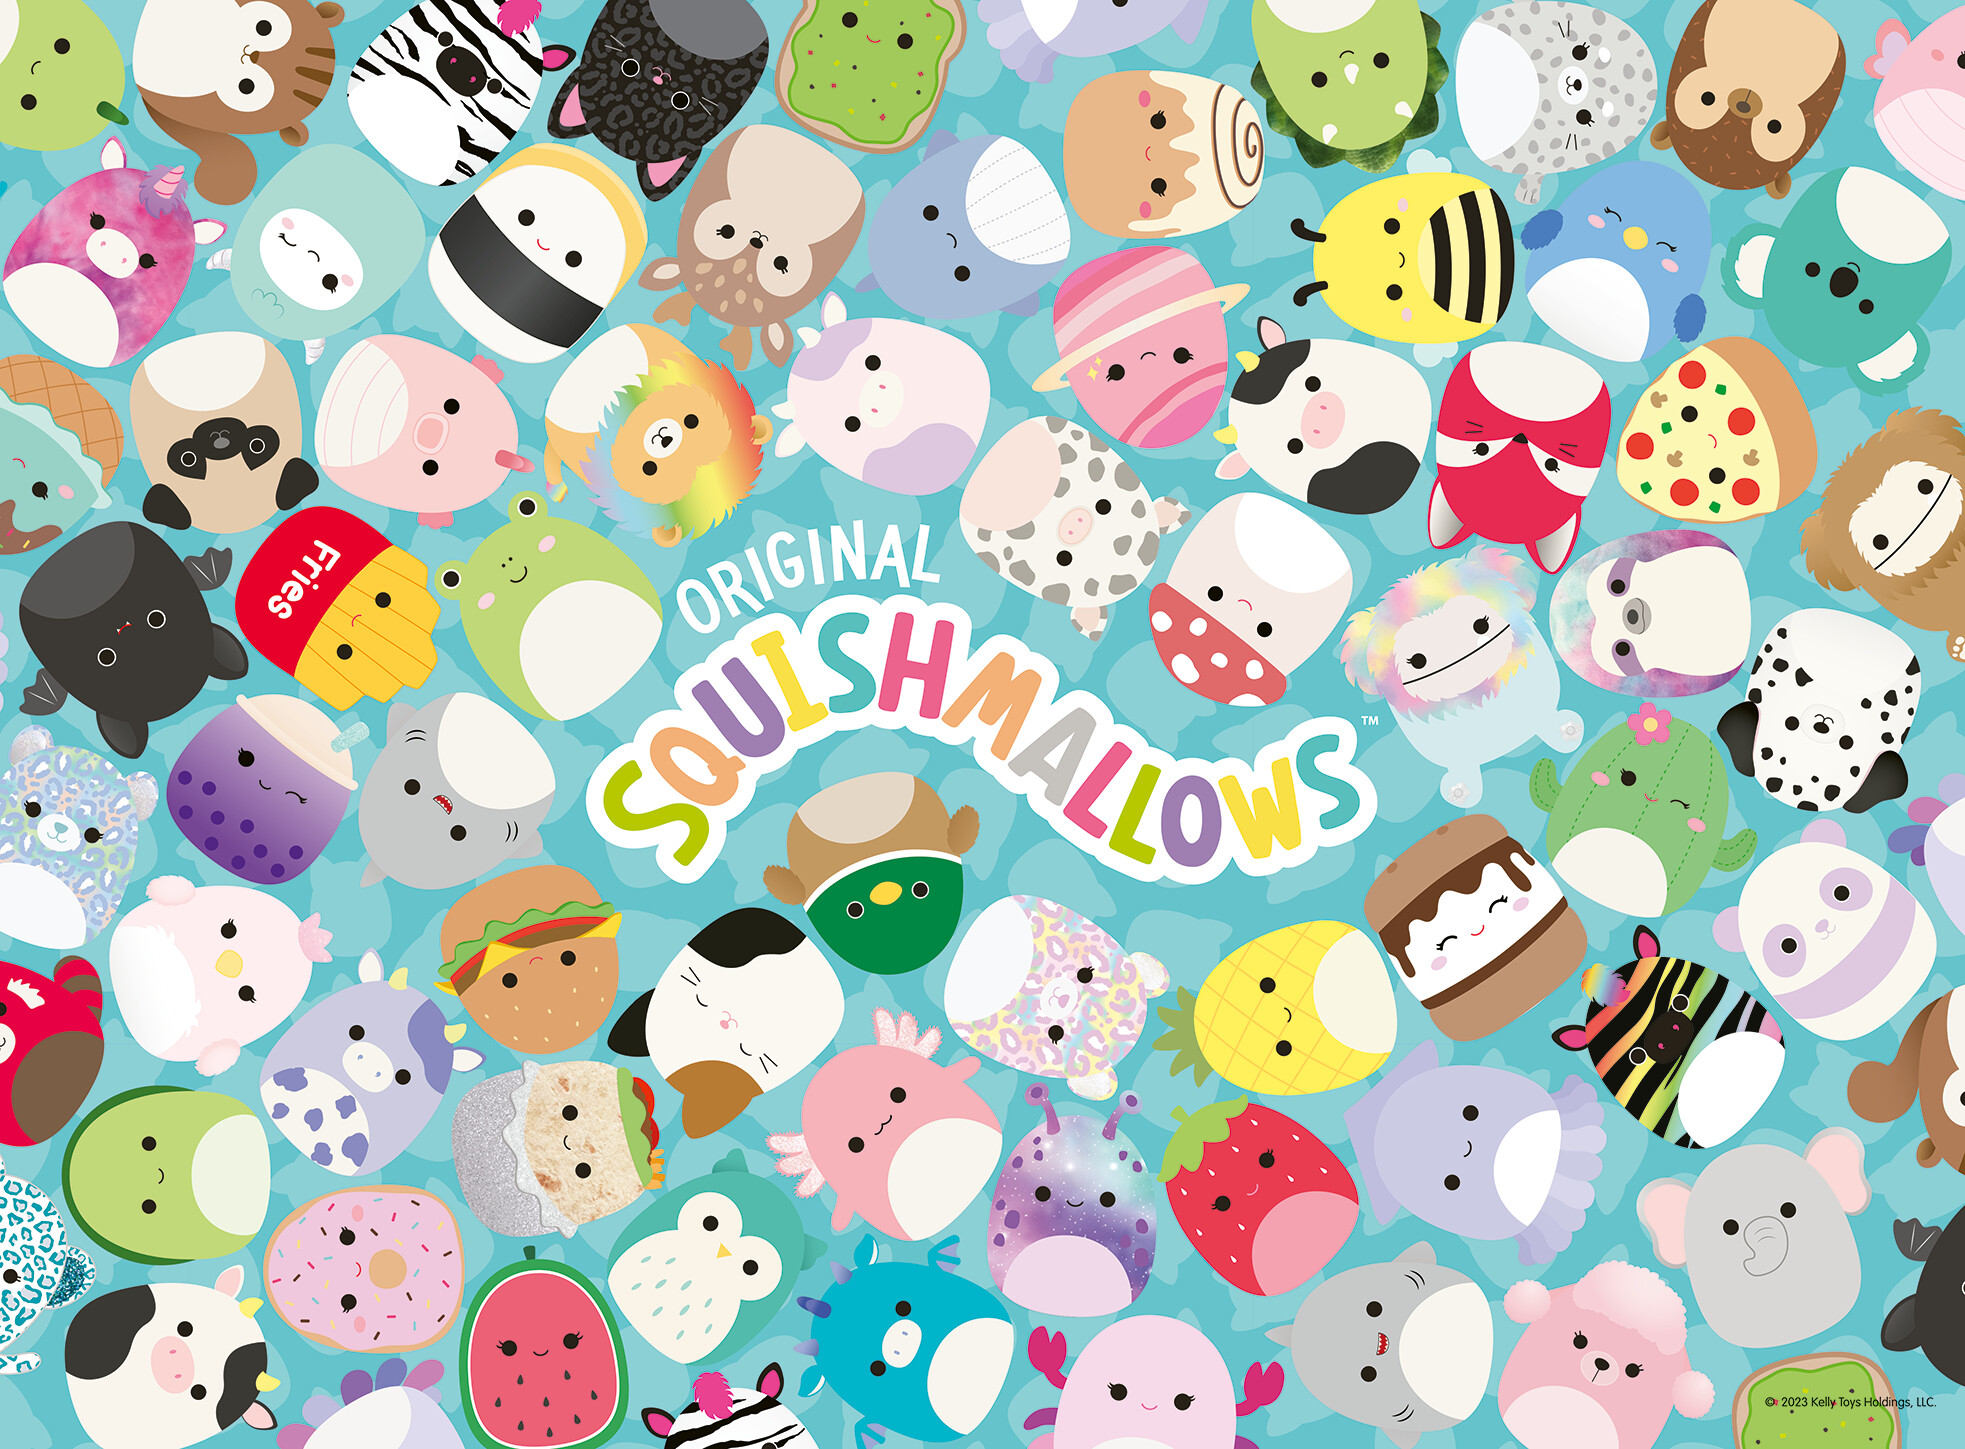 Ravensburger - puzzle squishmallows 200 pezzi xxl, età raccomandata 6+ anni - RAVENSBURGER